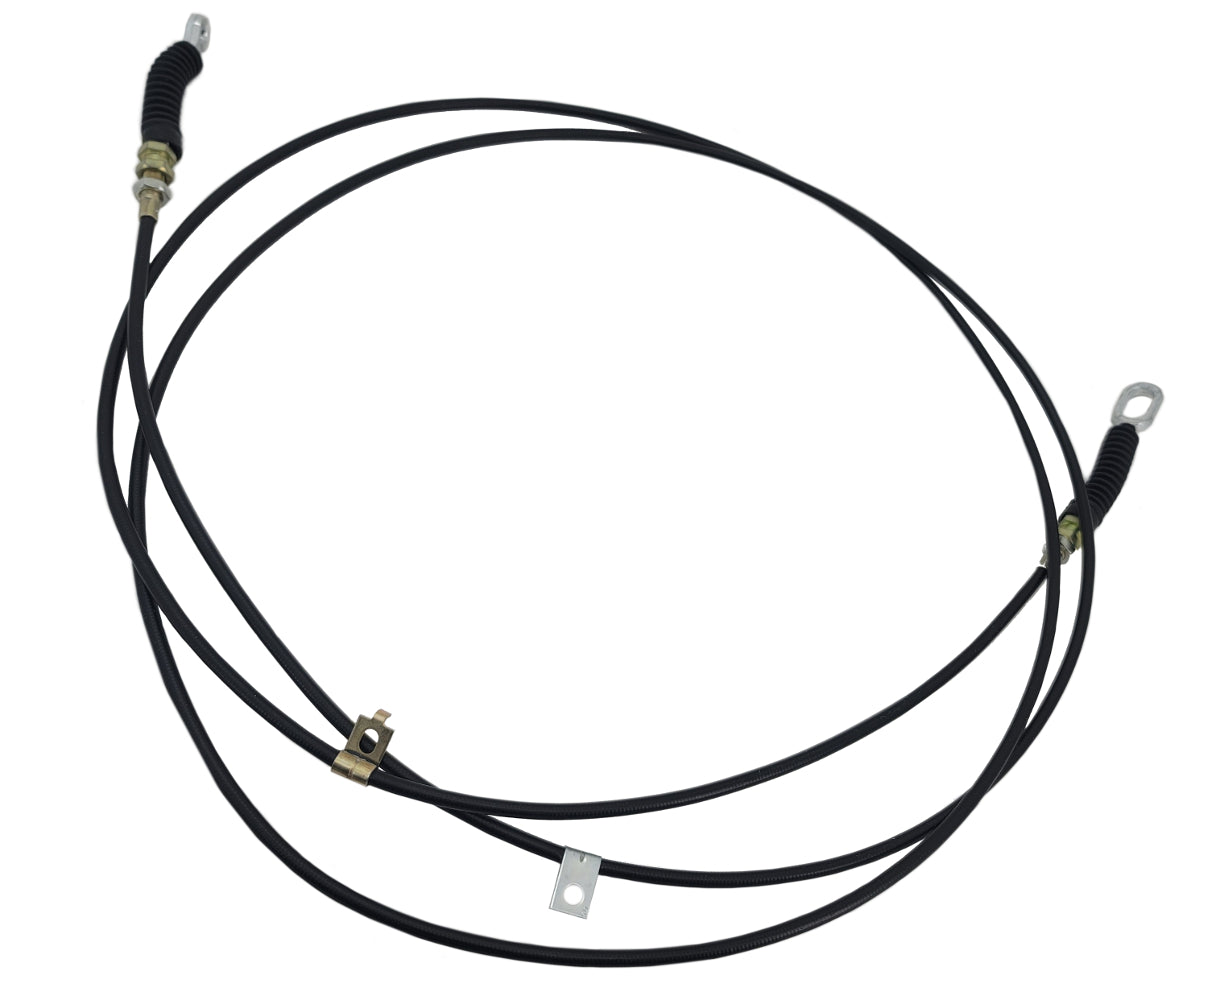 John Deere Original Equipment Cable - AM130238